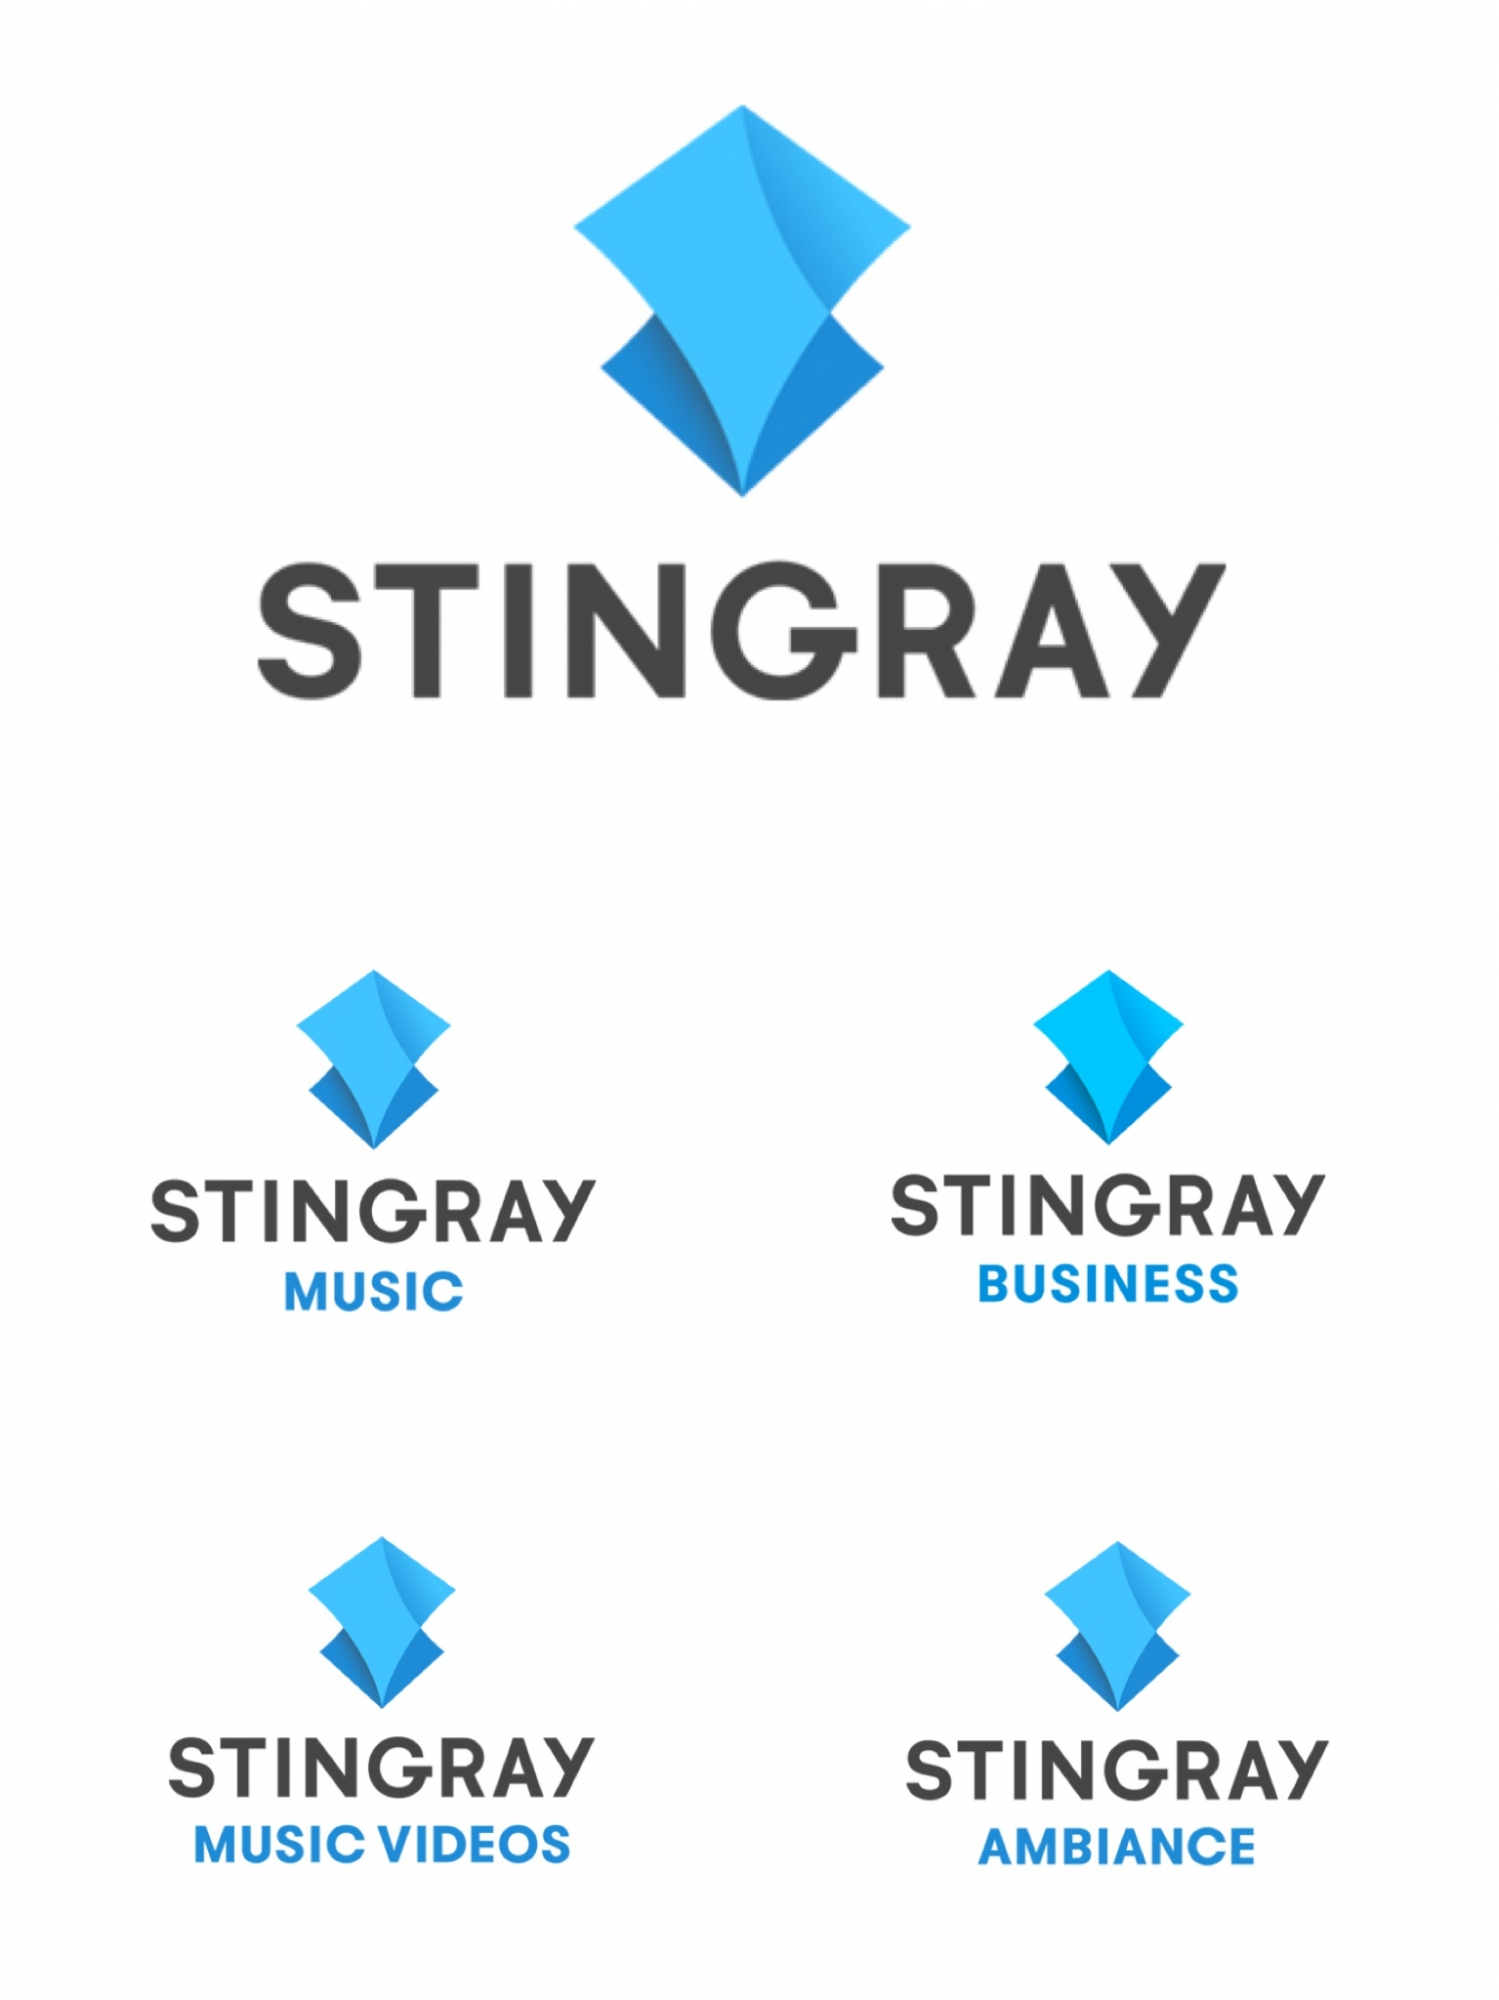 stingray_family_products-en.jpg